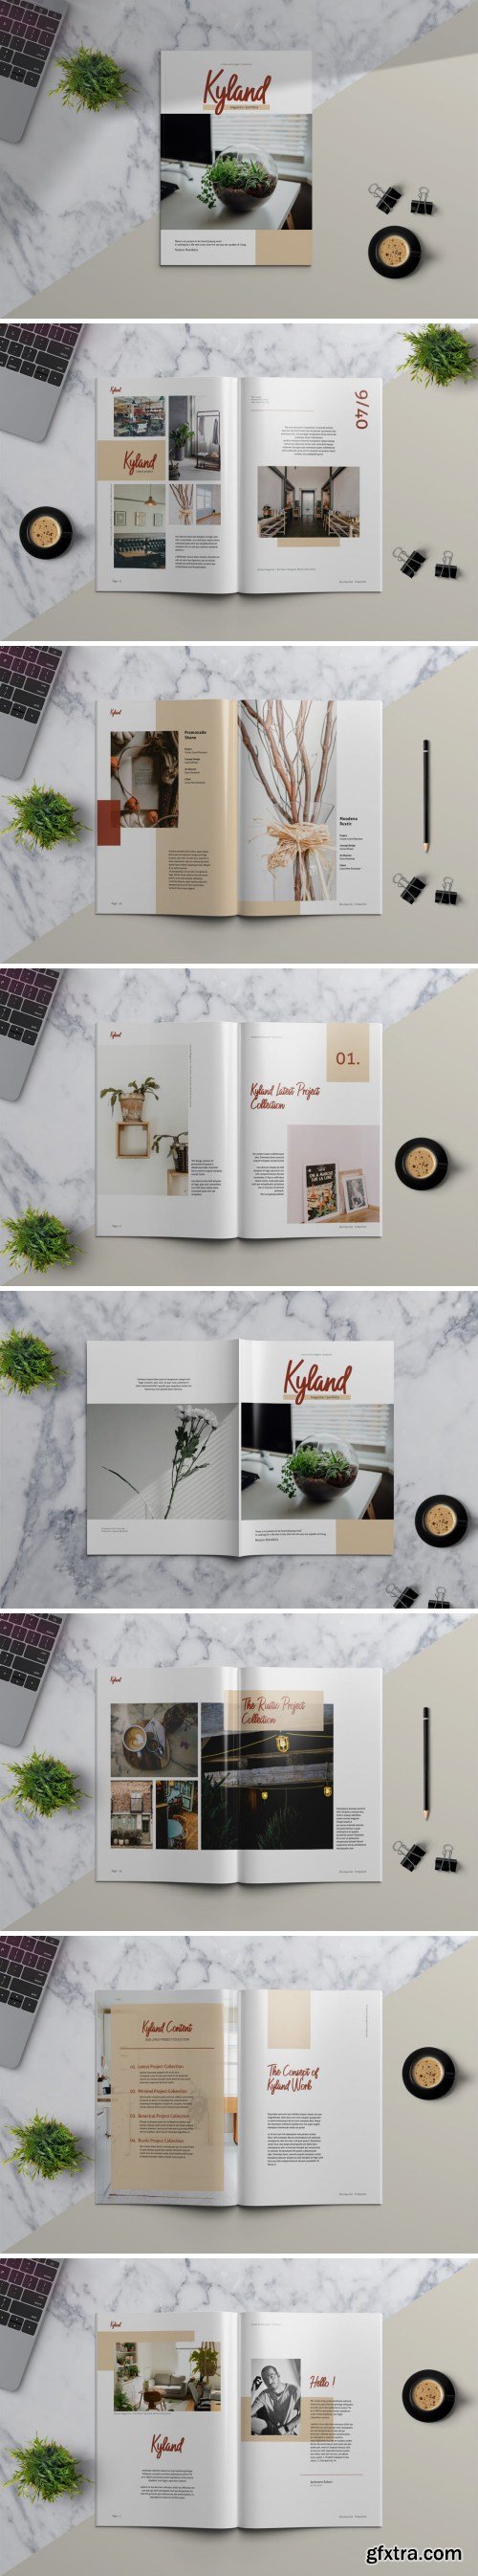 KYLAND - Magazine & Portfolio Template